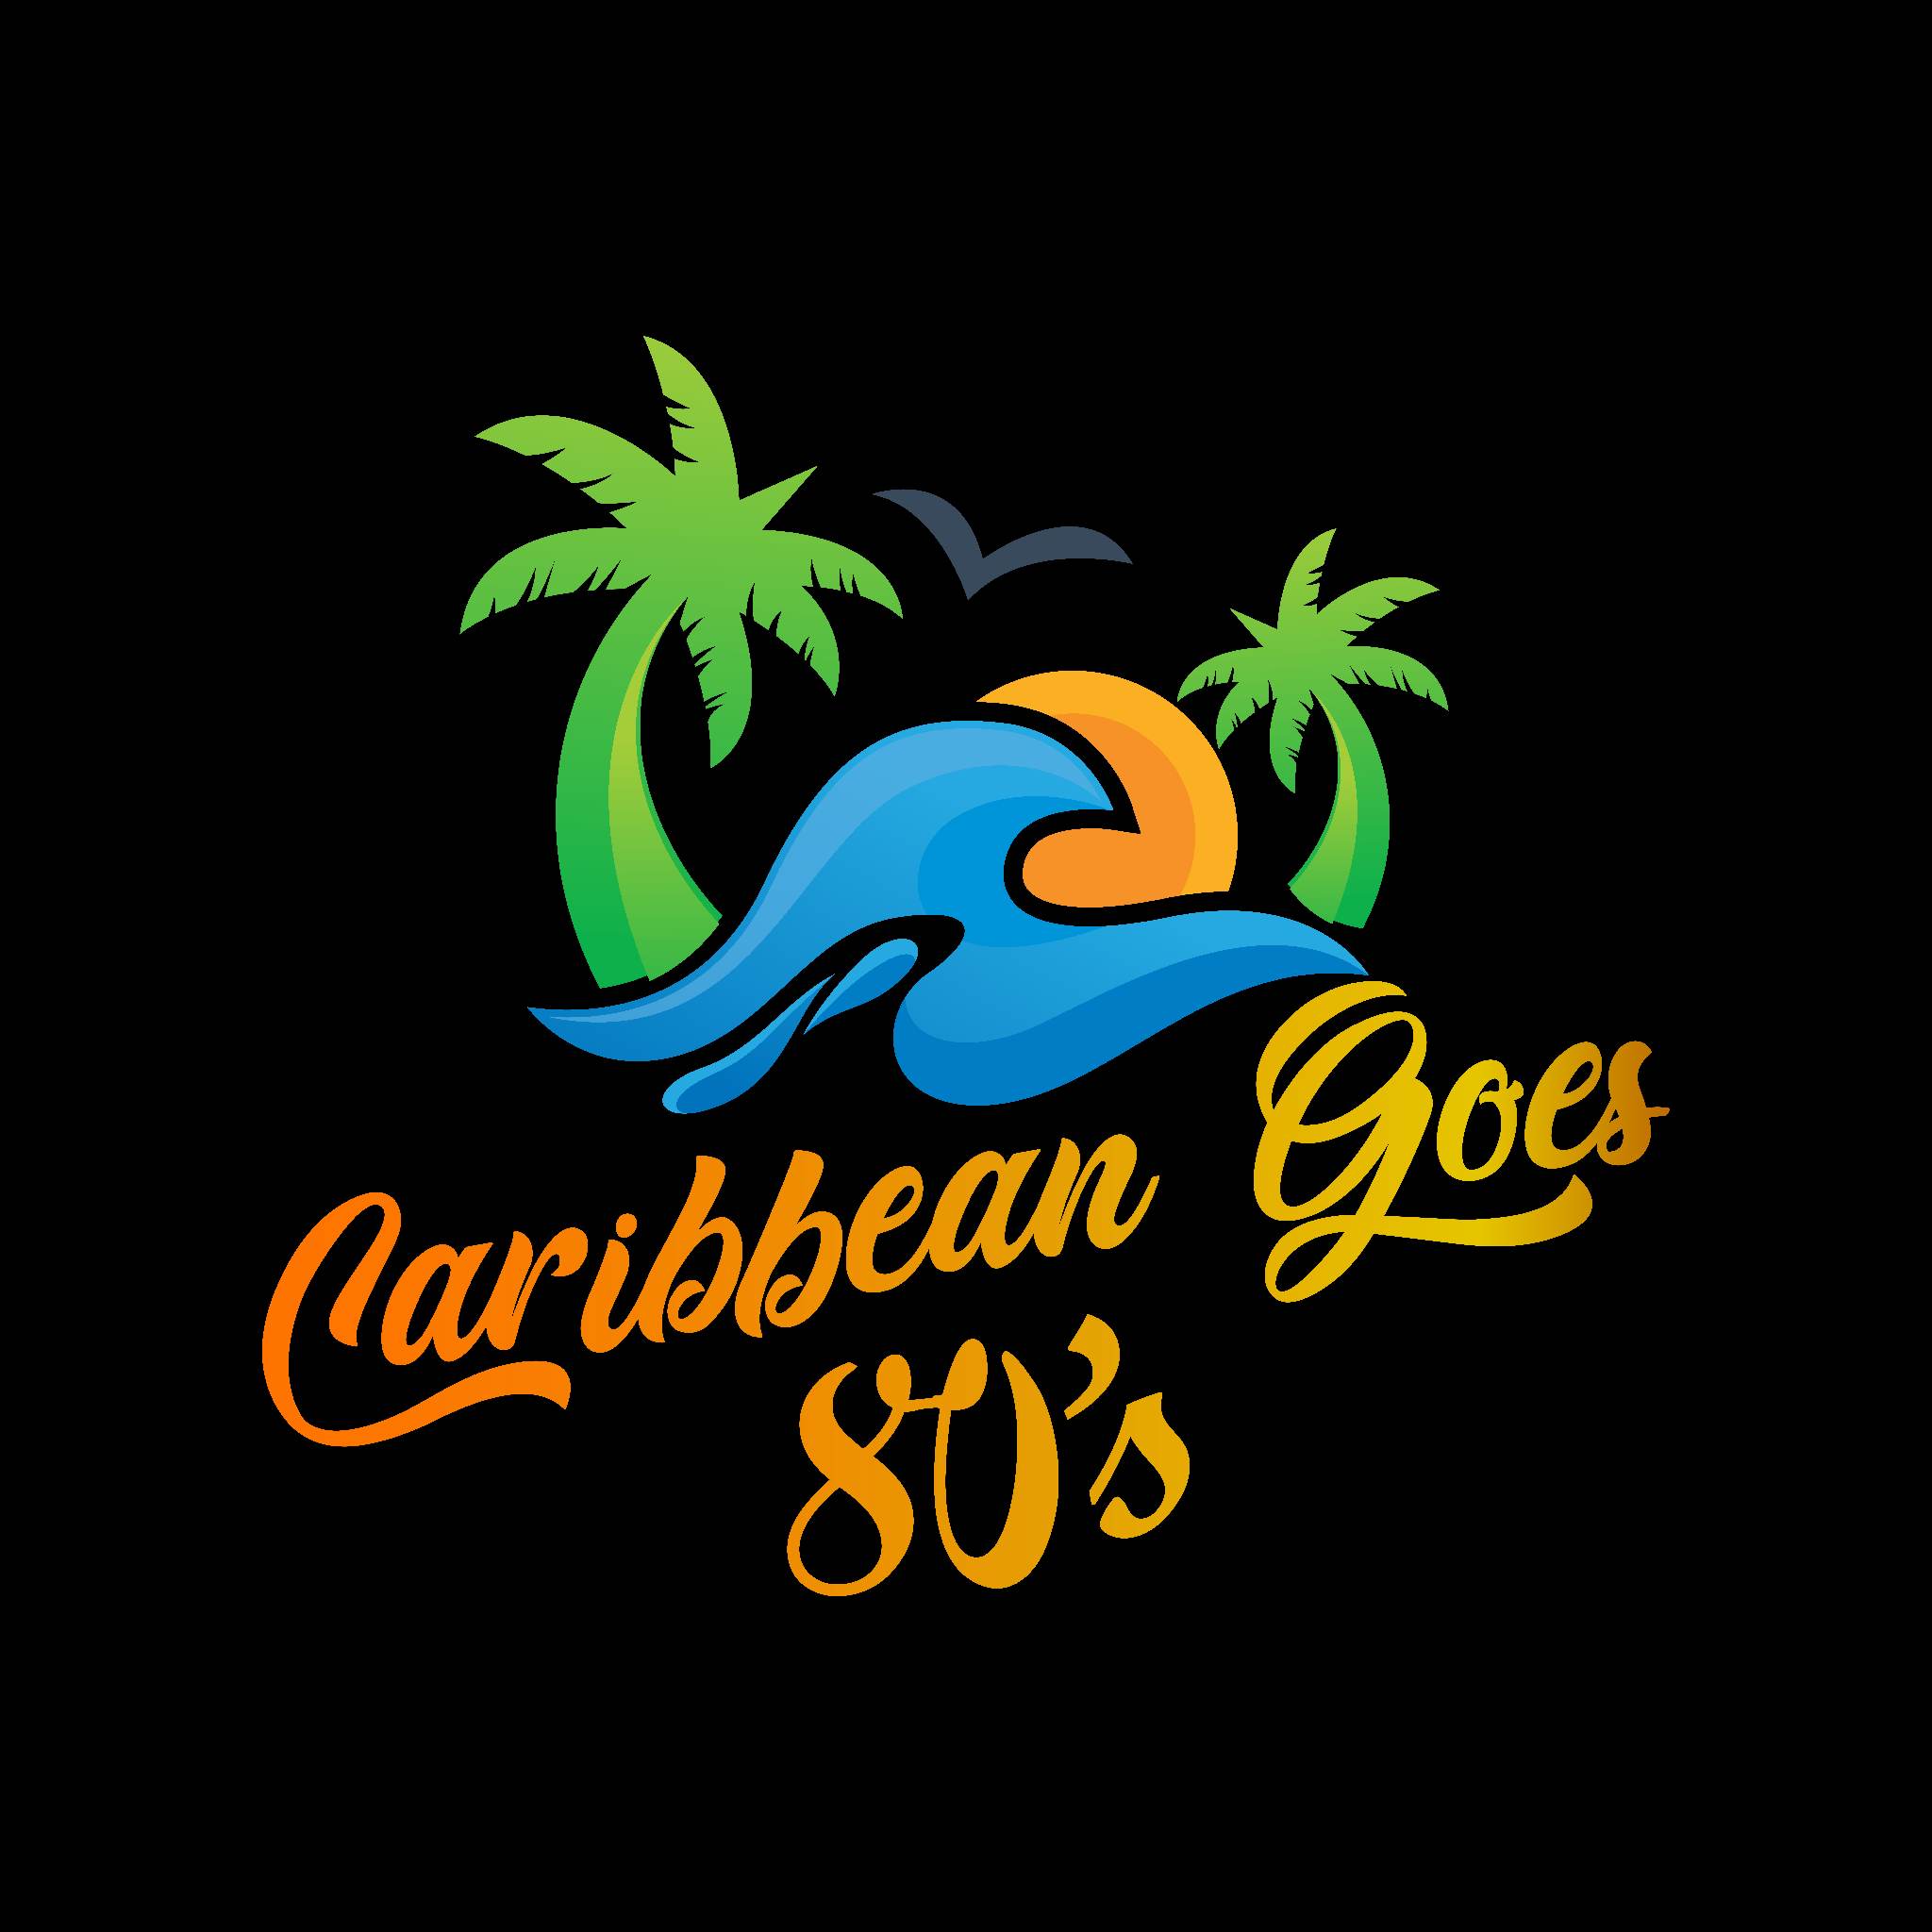 Caribbean Goes 80s 2025